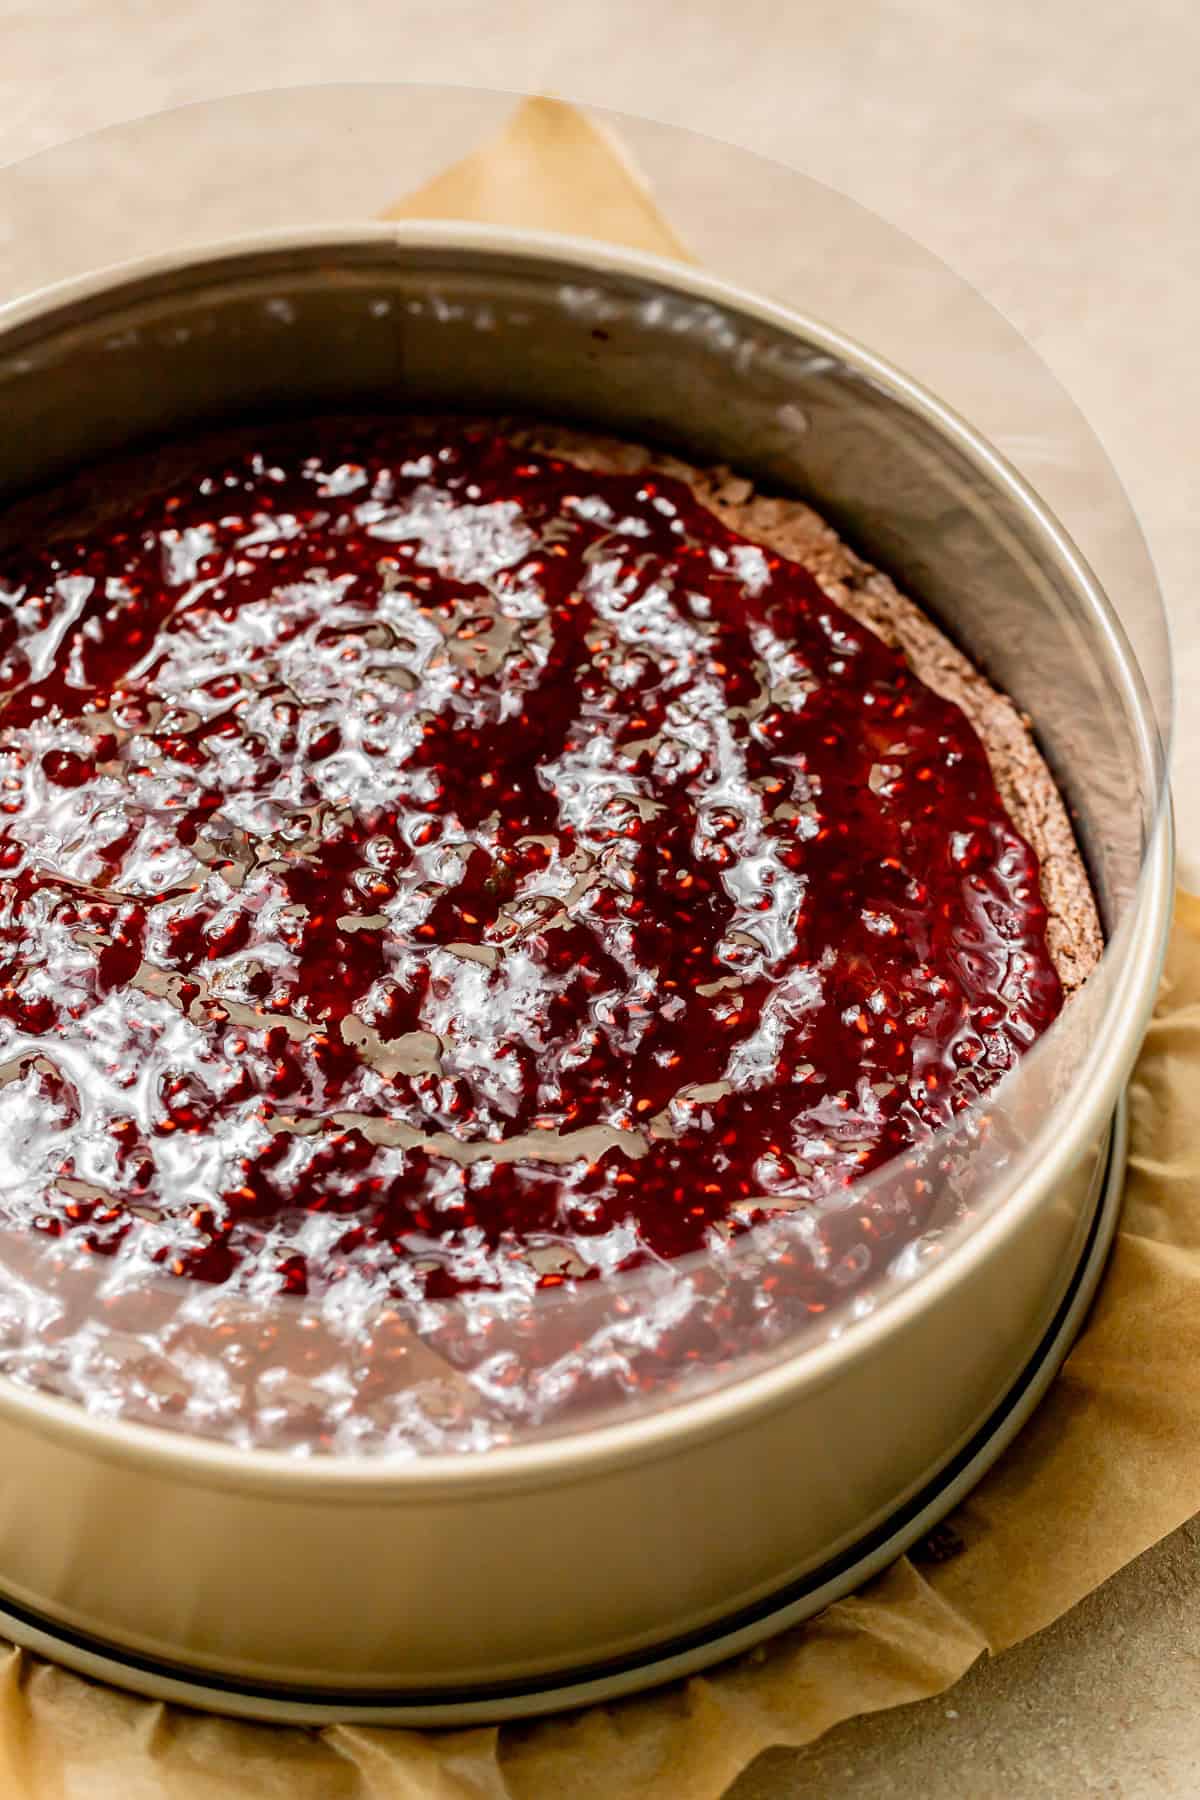 raspberry jam spread onto chocolate cake in springform pan.